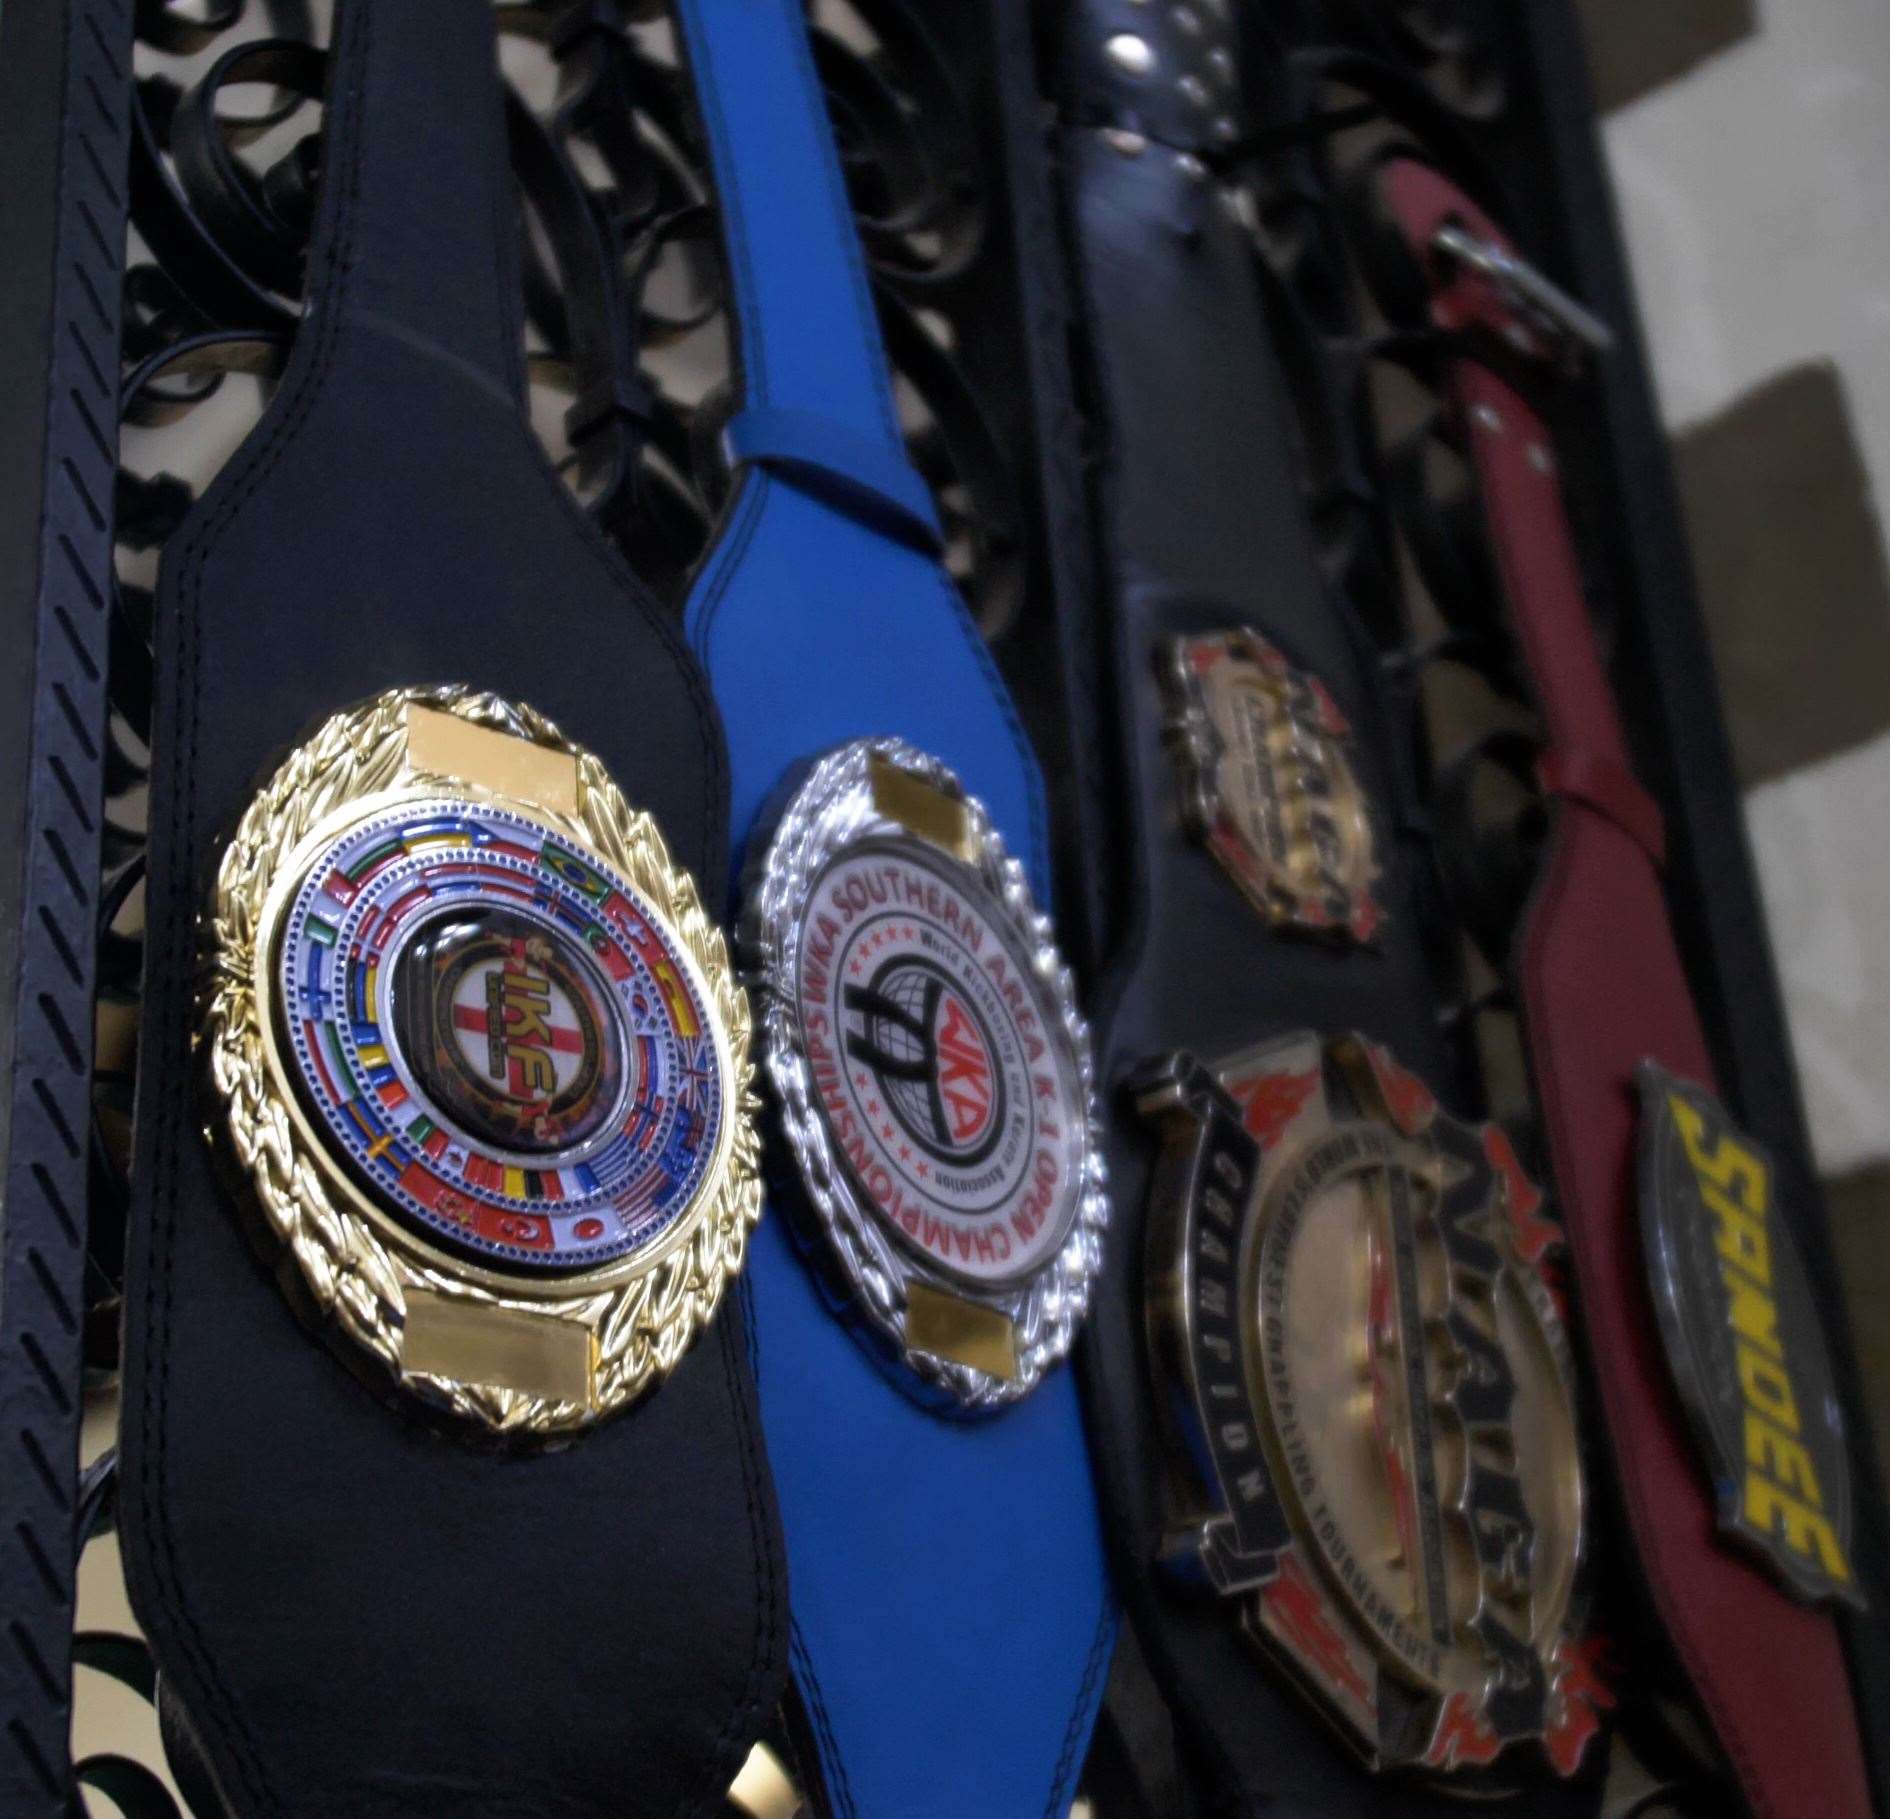 Championship belts at Granite Gym in Chatham